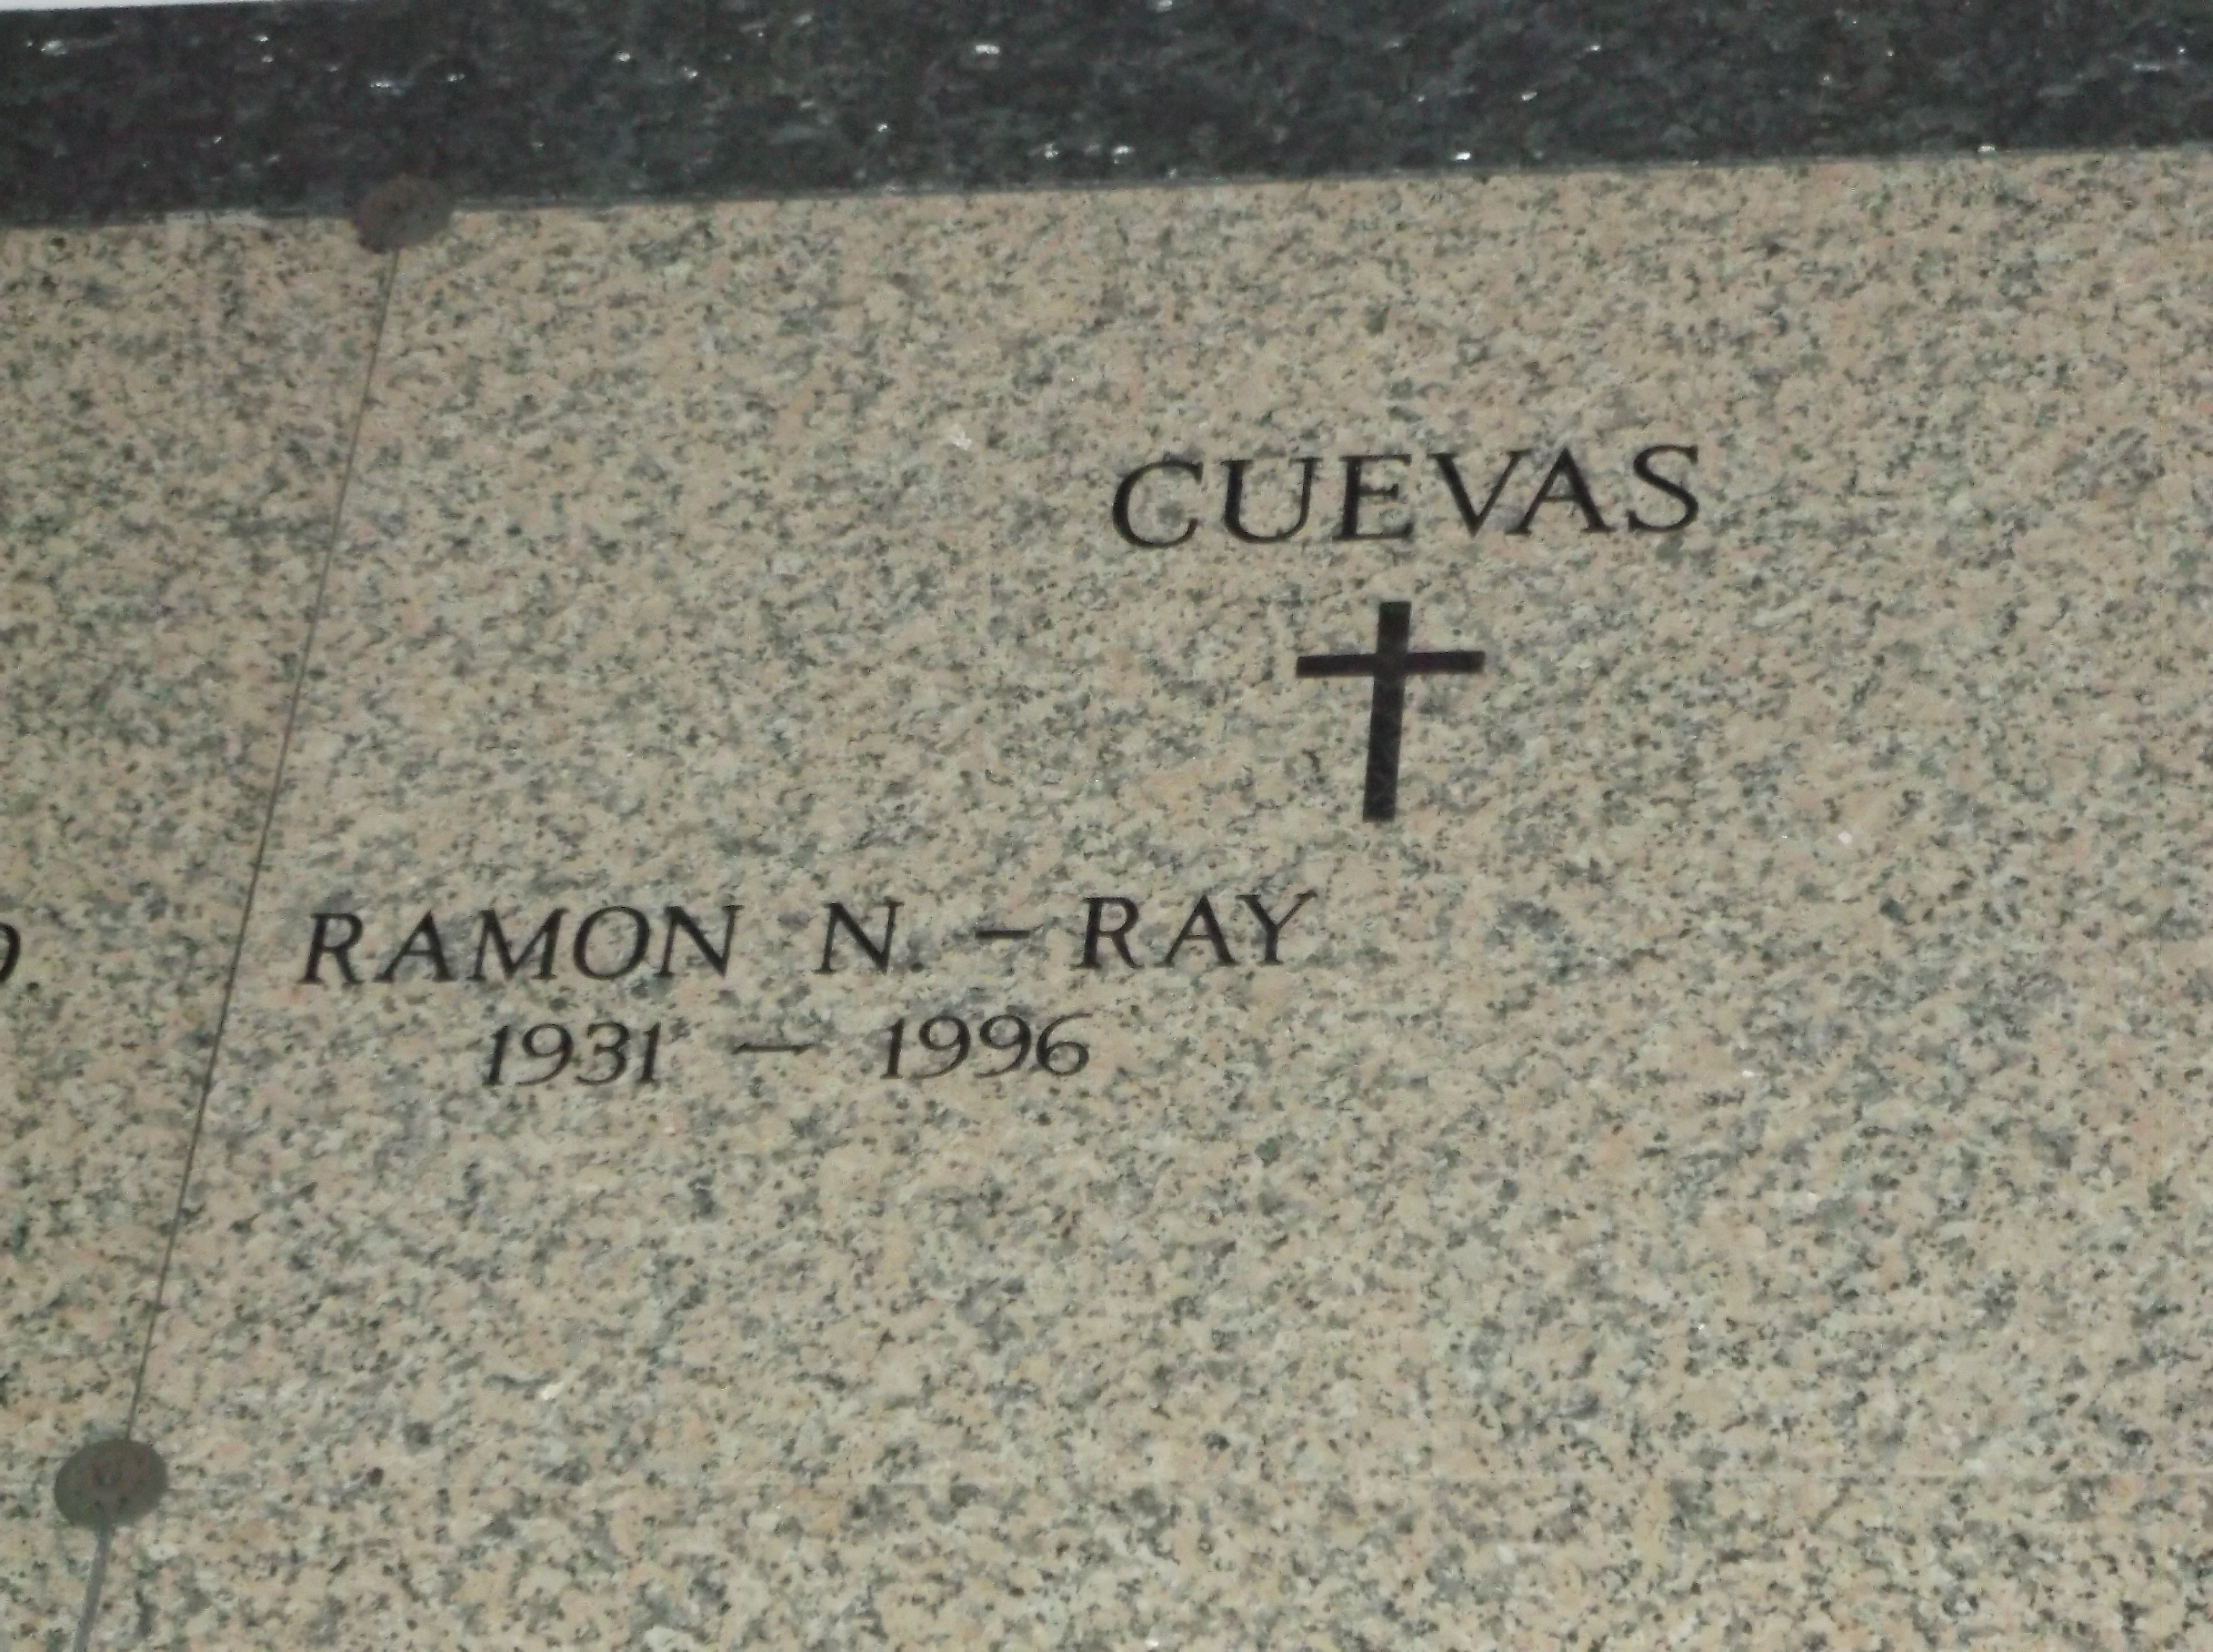 Ramon N "Ray" Cuevas